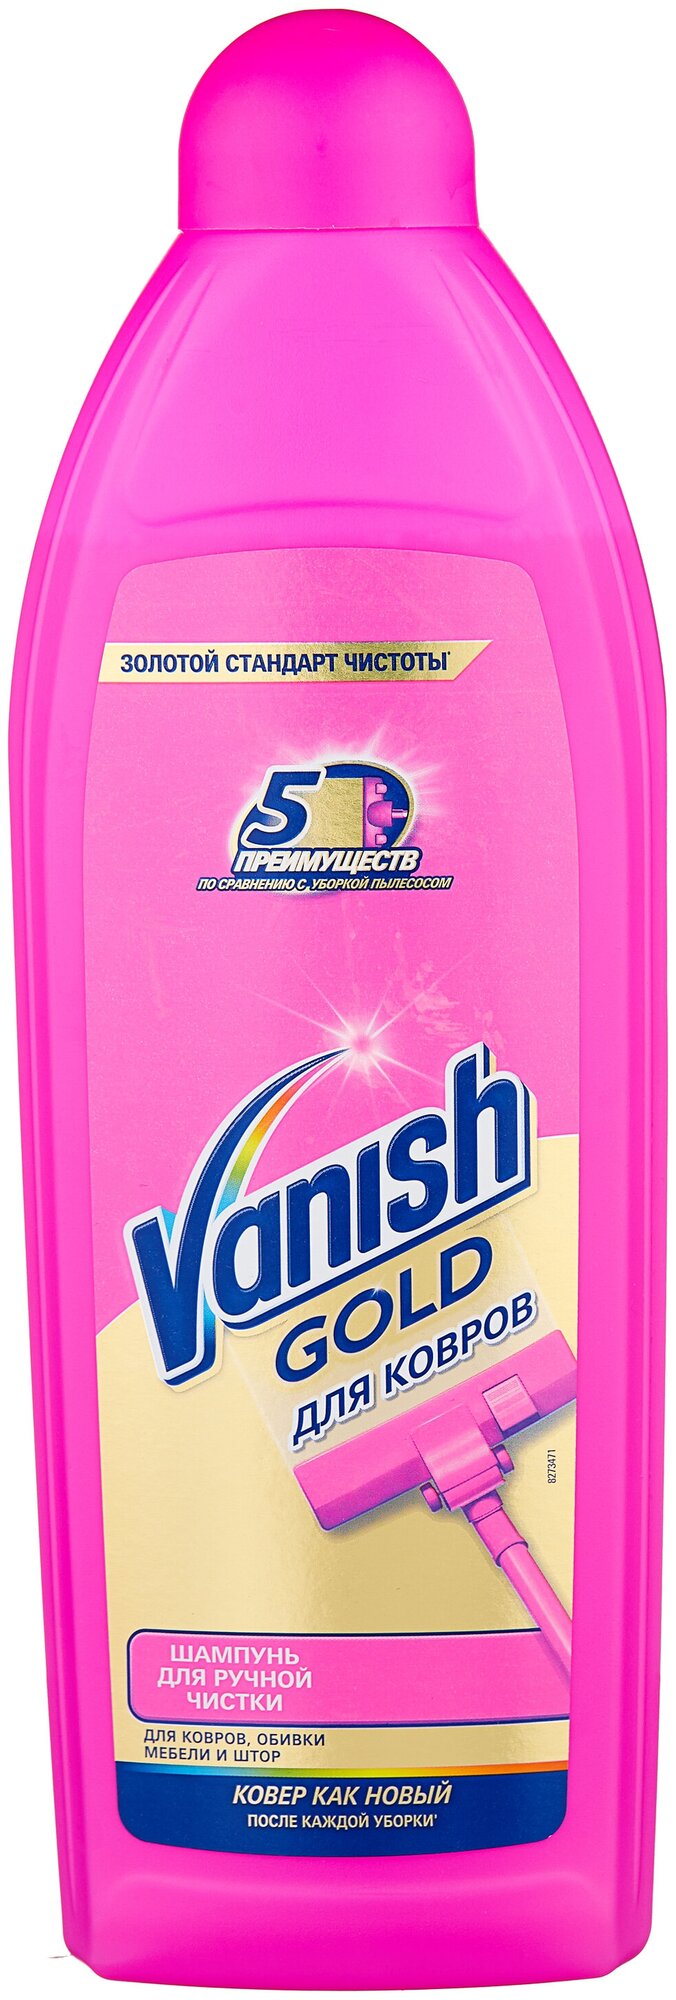 Vanish Gold для ковров 100 ml